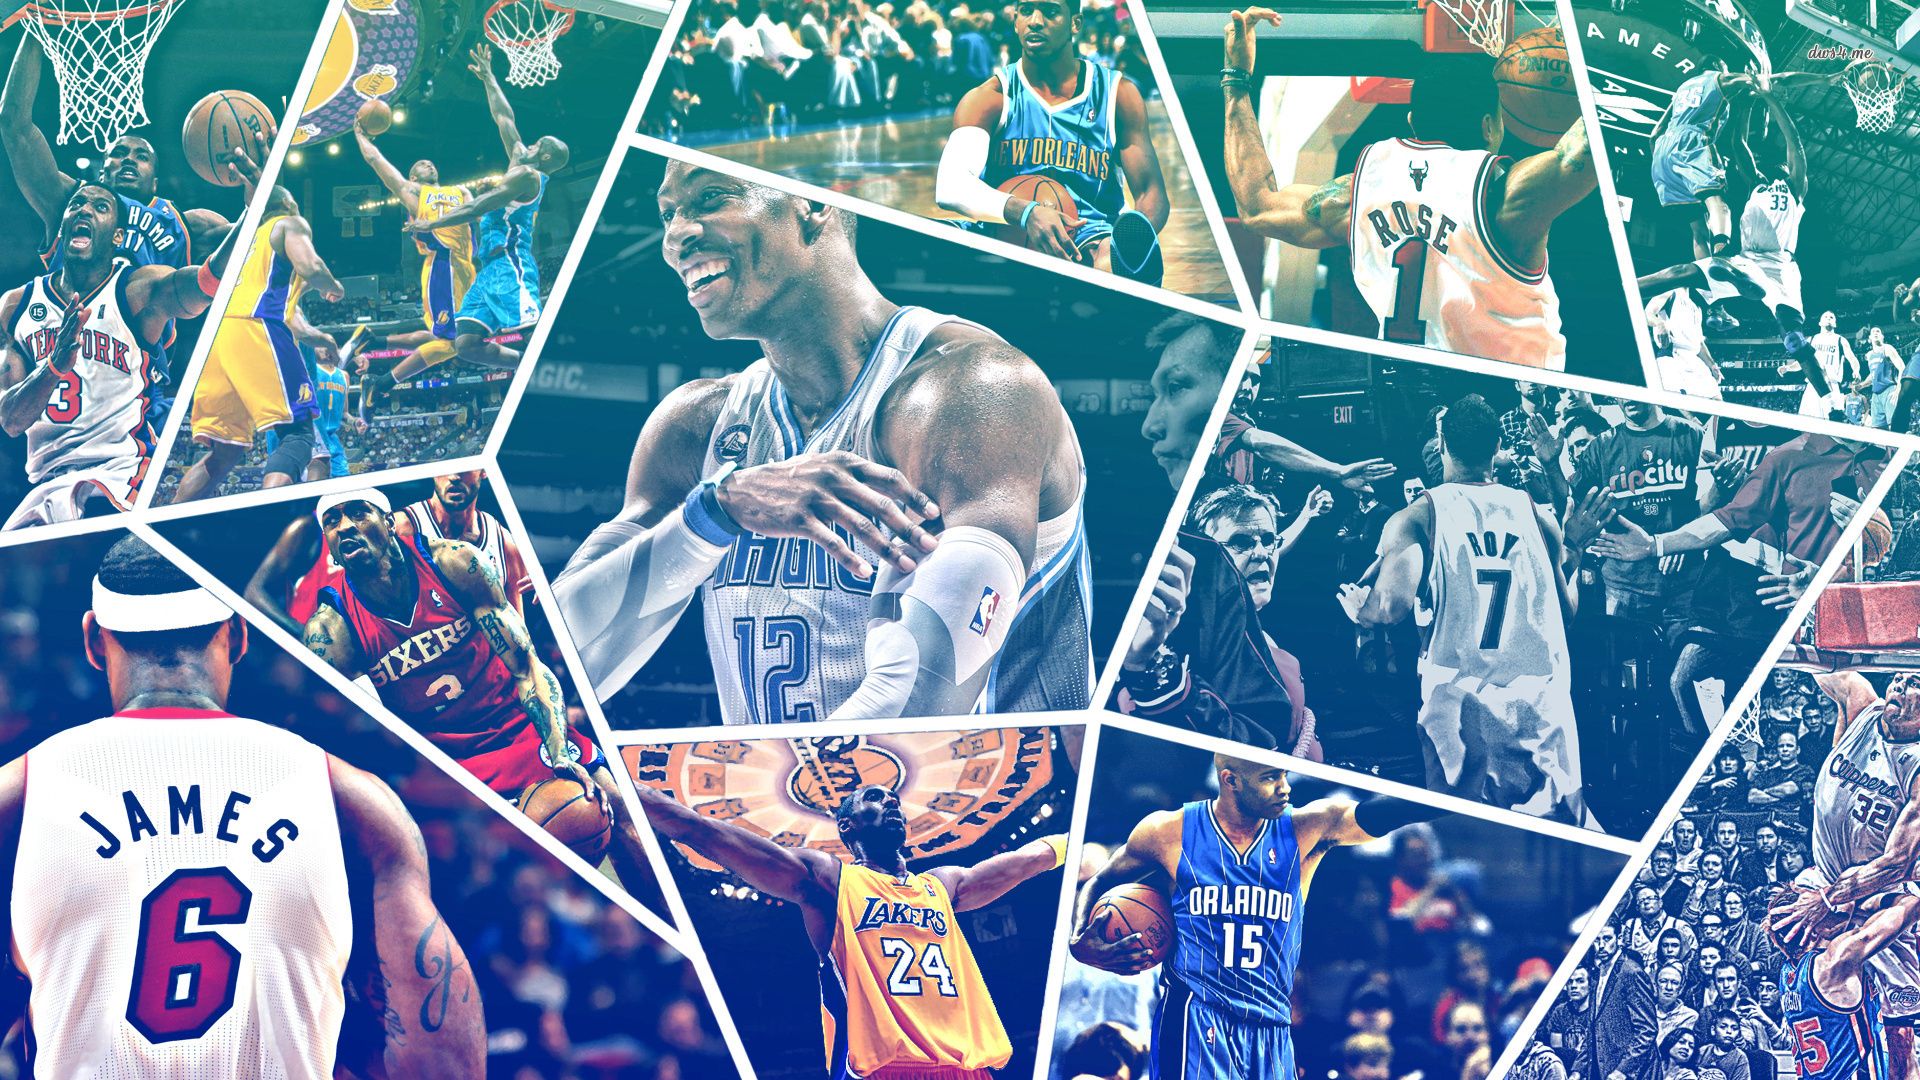 NBA players wallpaper - Sport wallpapers